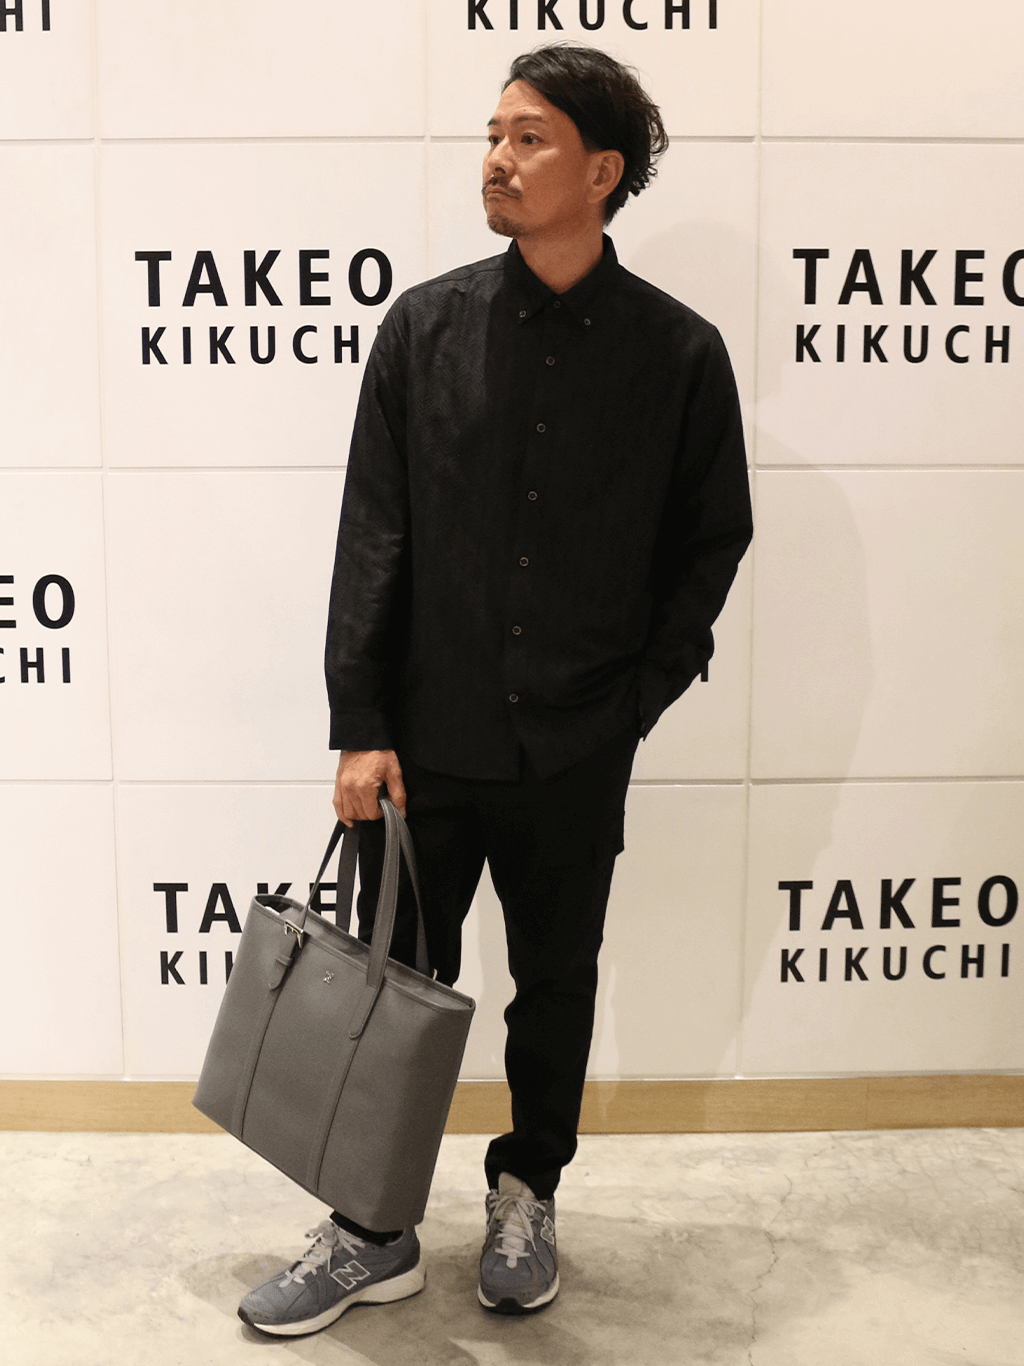 TAKEO KIKUCHI Thailand - Master of men's style from Tokyo